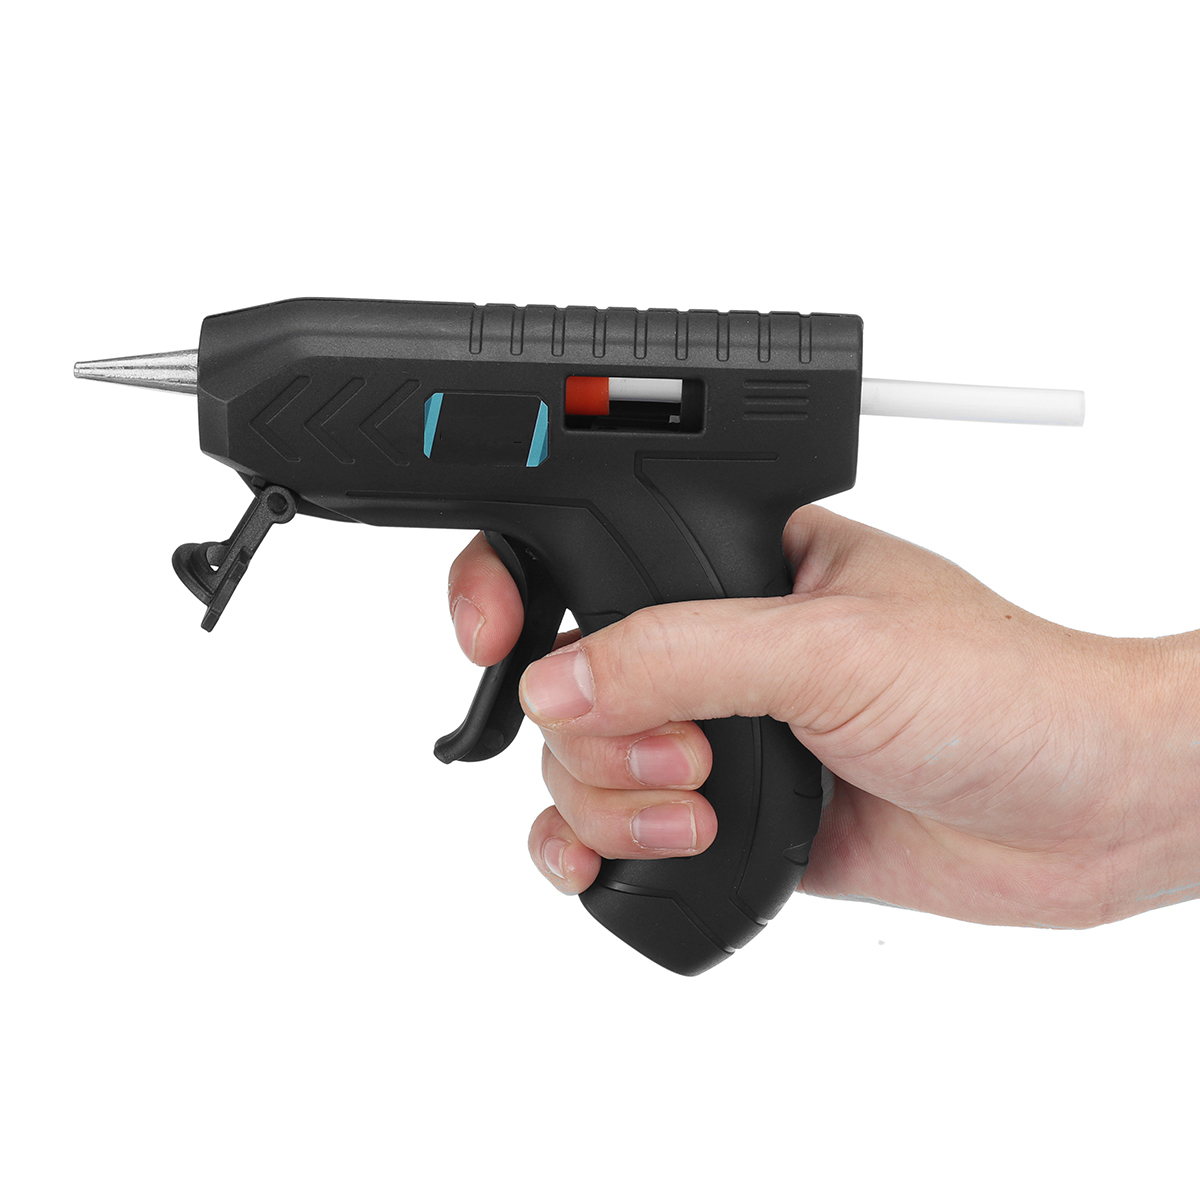 Find 3 6V Cordless DIY Hot Glue Guns 1800mAh Li ion Glue Hand Craft Power Tool W/ 10/40/100pcs Glue Sticks for Sale on Gipsybee.com with cryptocurrencies